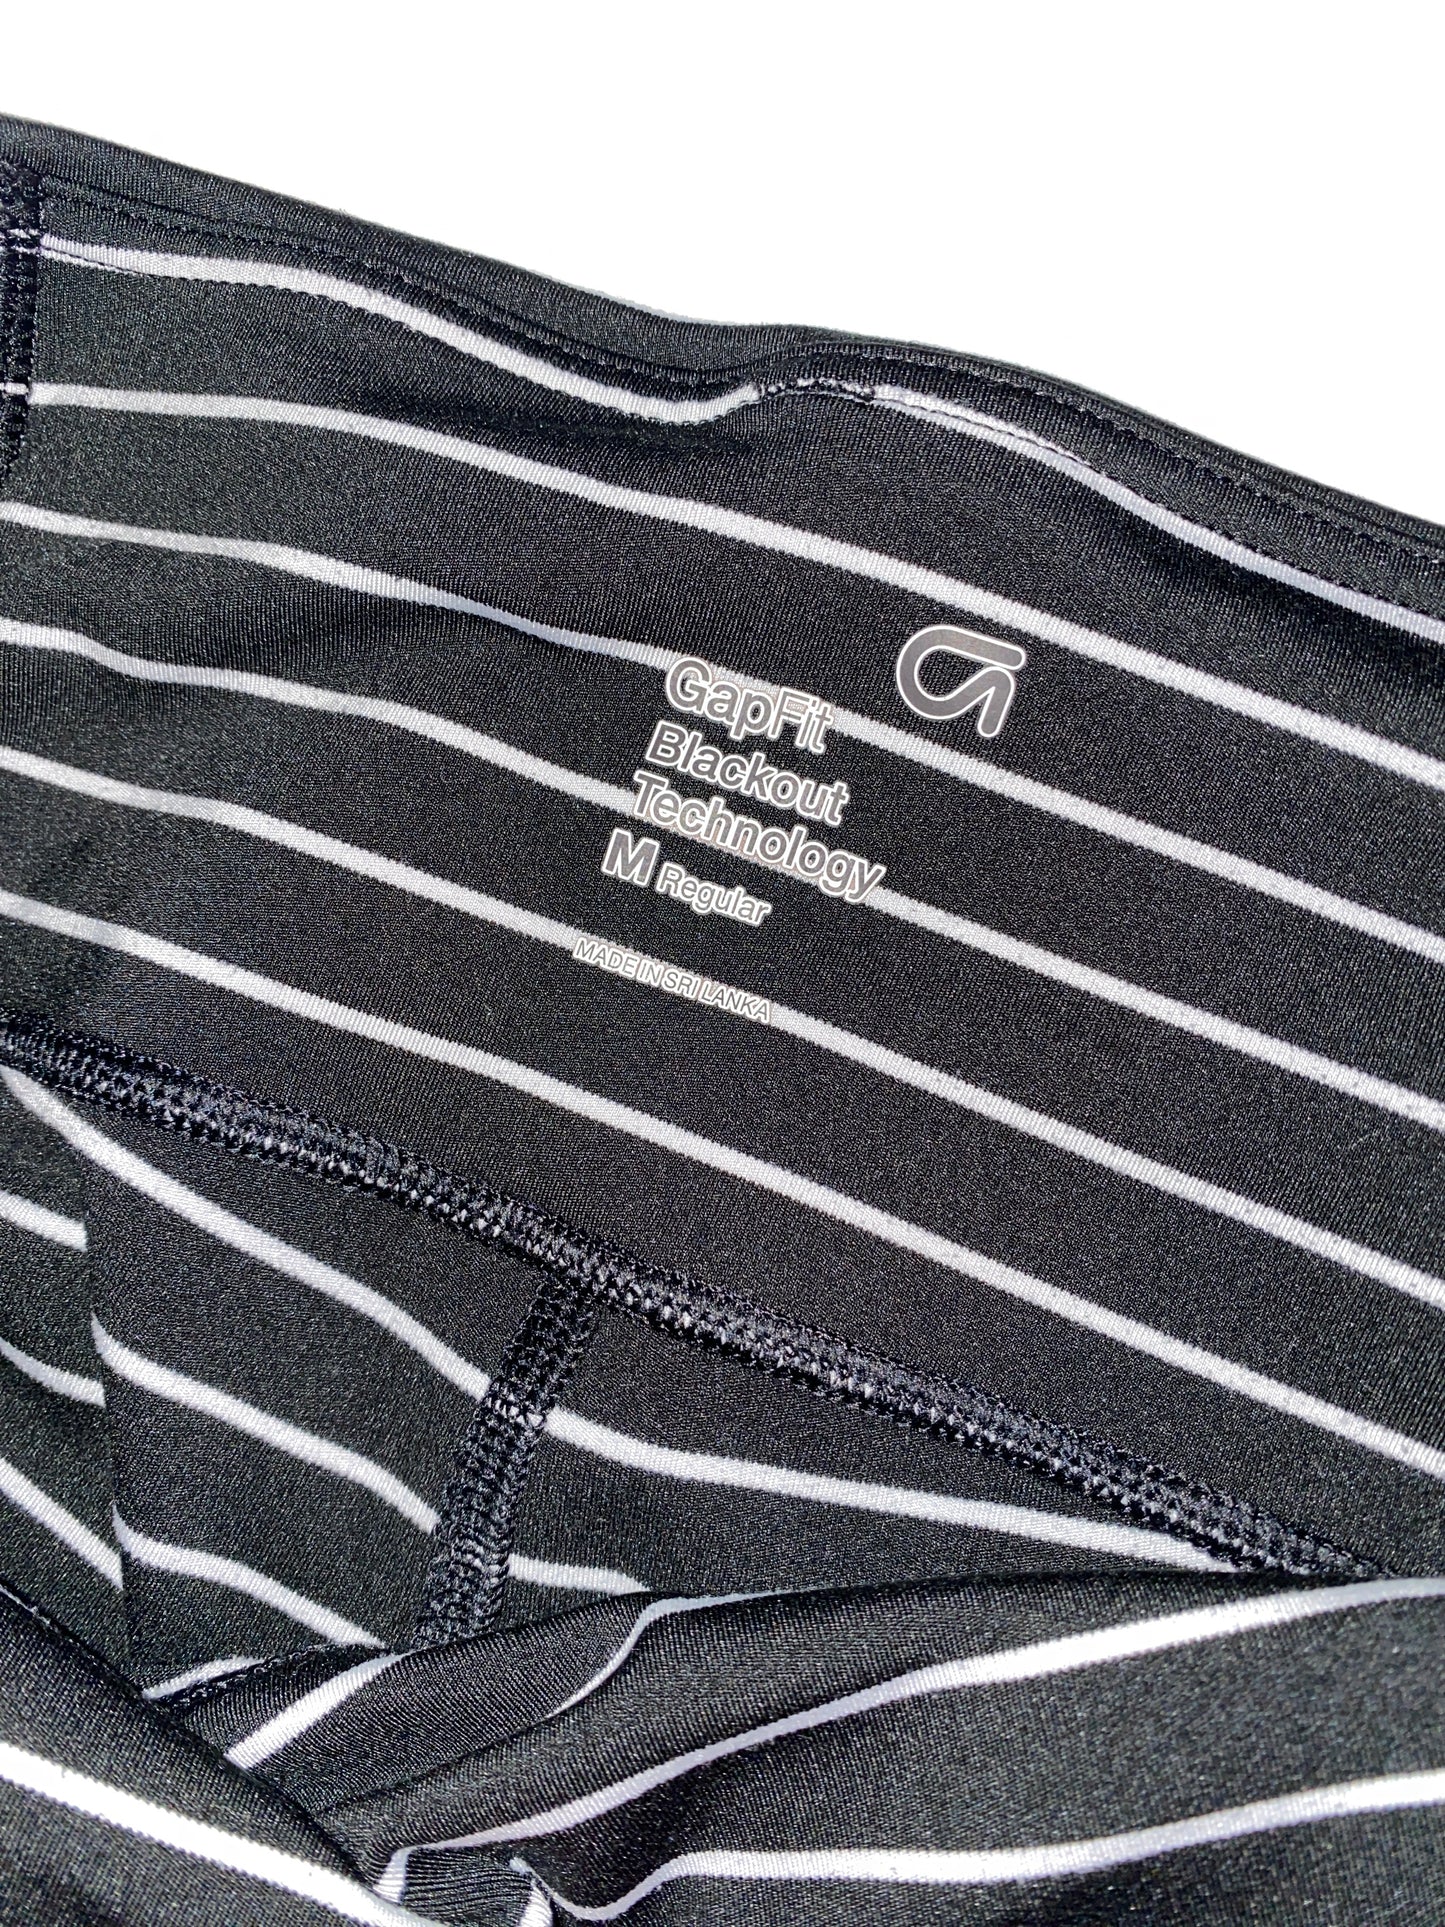 Gap black and white stripe leggings women's size M